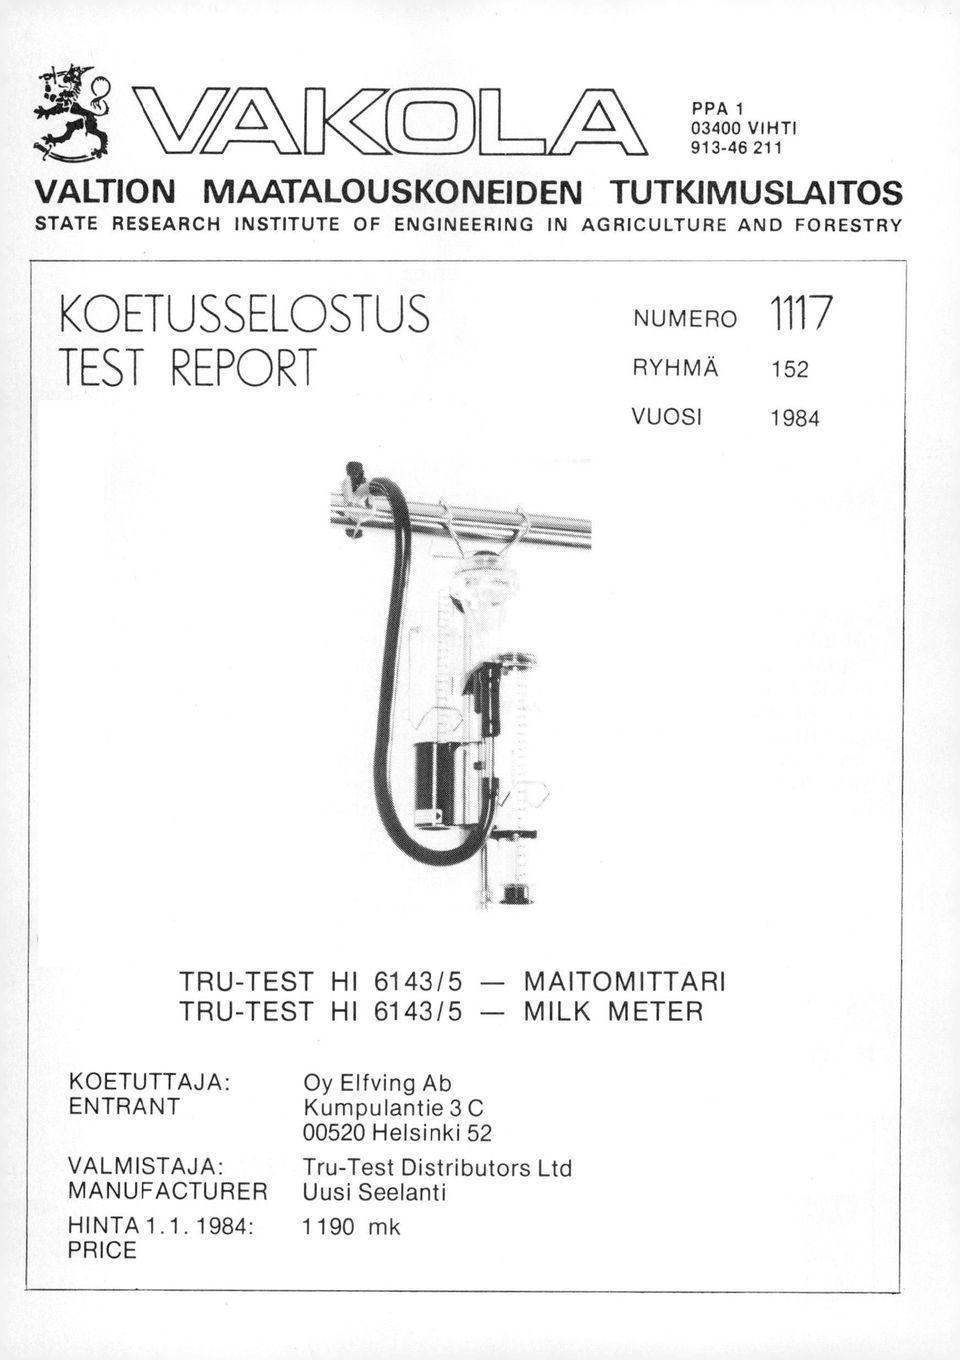 ENGINEERING IN AGRICULTURE AND FORESTRY KOETUSSELOSTUS NUMERO 1117 TEST REPORT RYHMÄ 152 VUOSI 1984 TRU-TEST